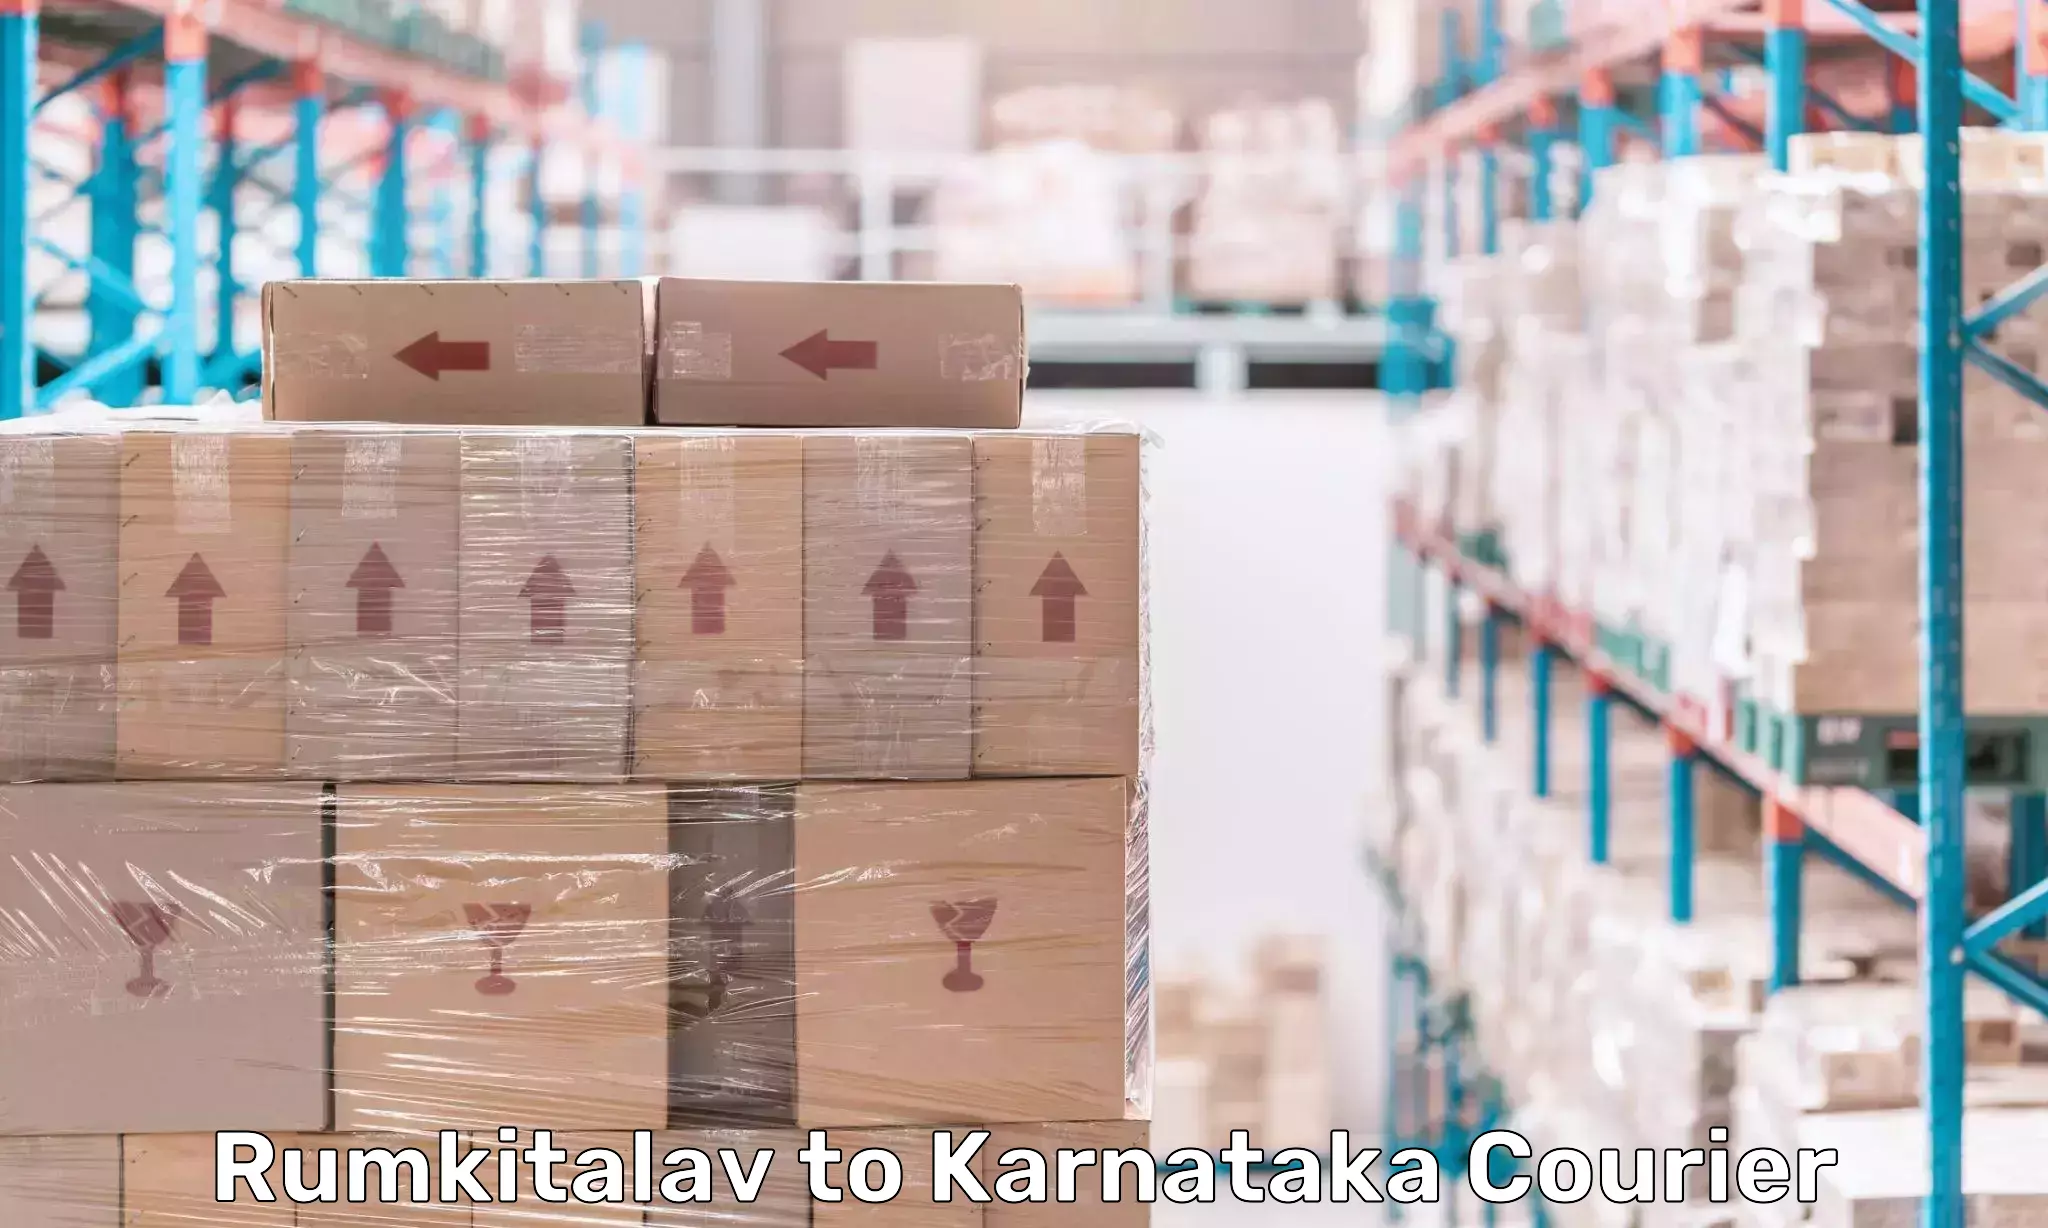 Courier service partnerships Rumkitalav to Karnataka